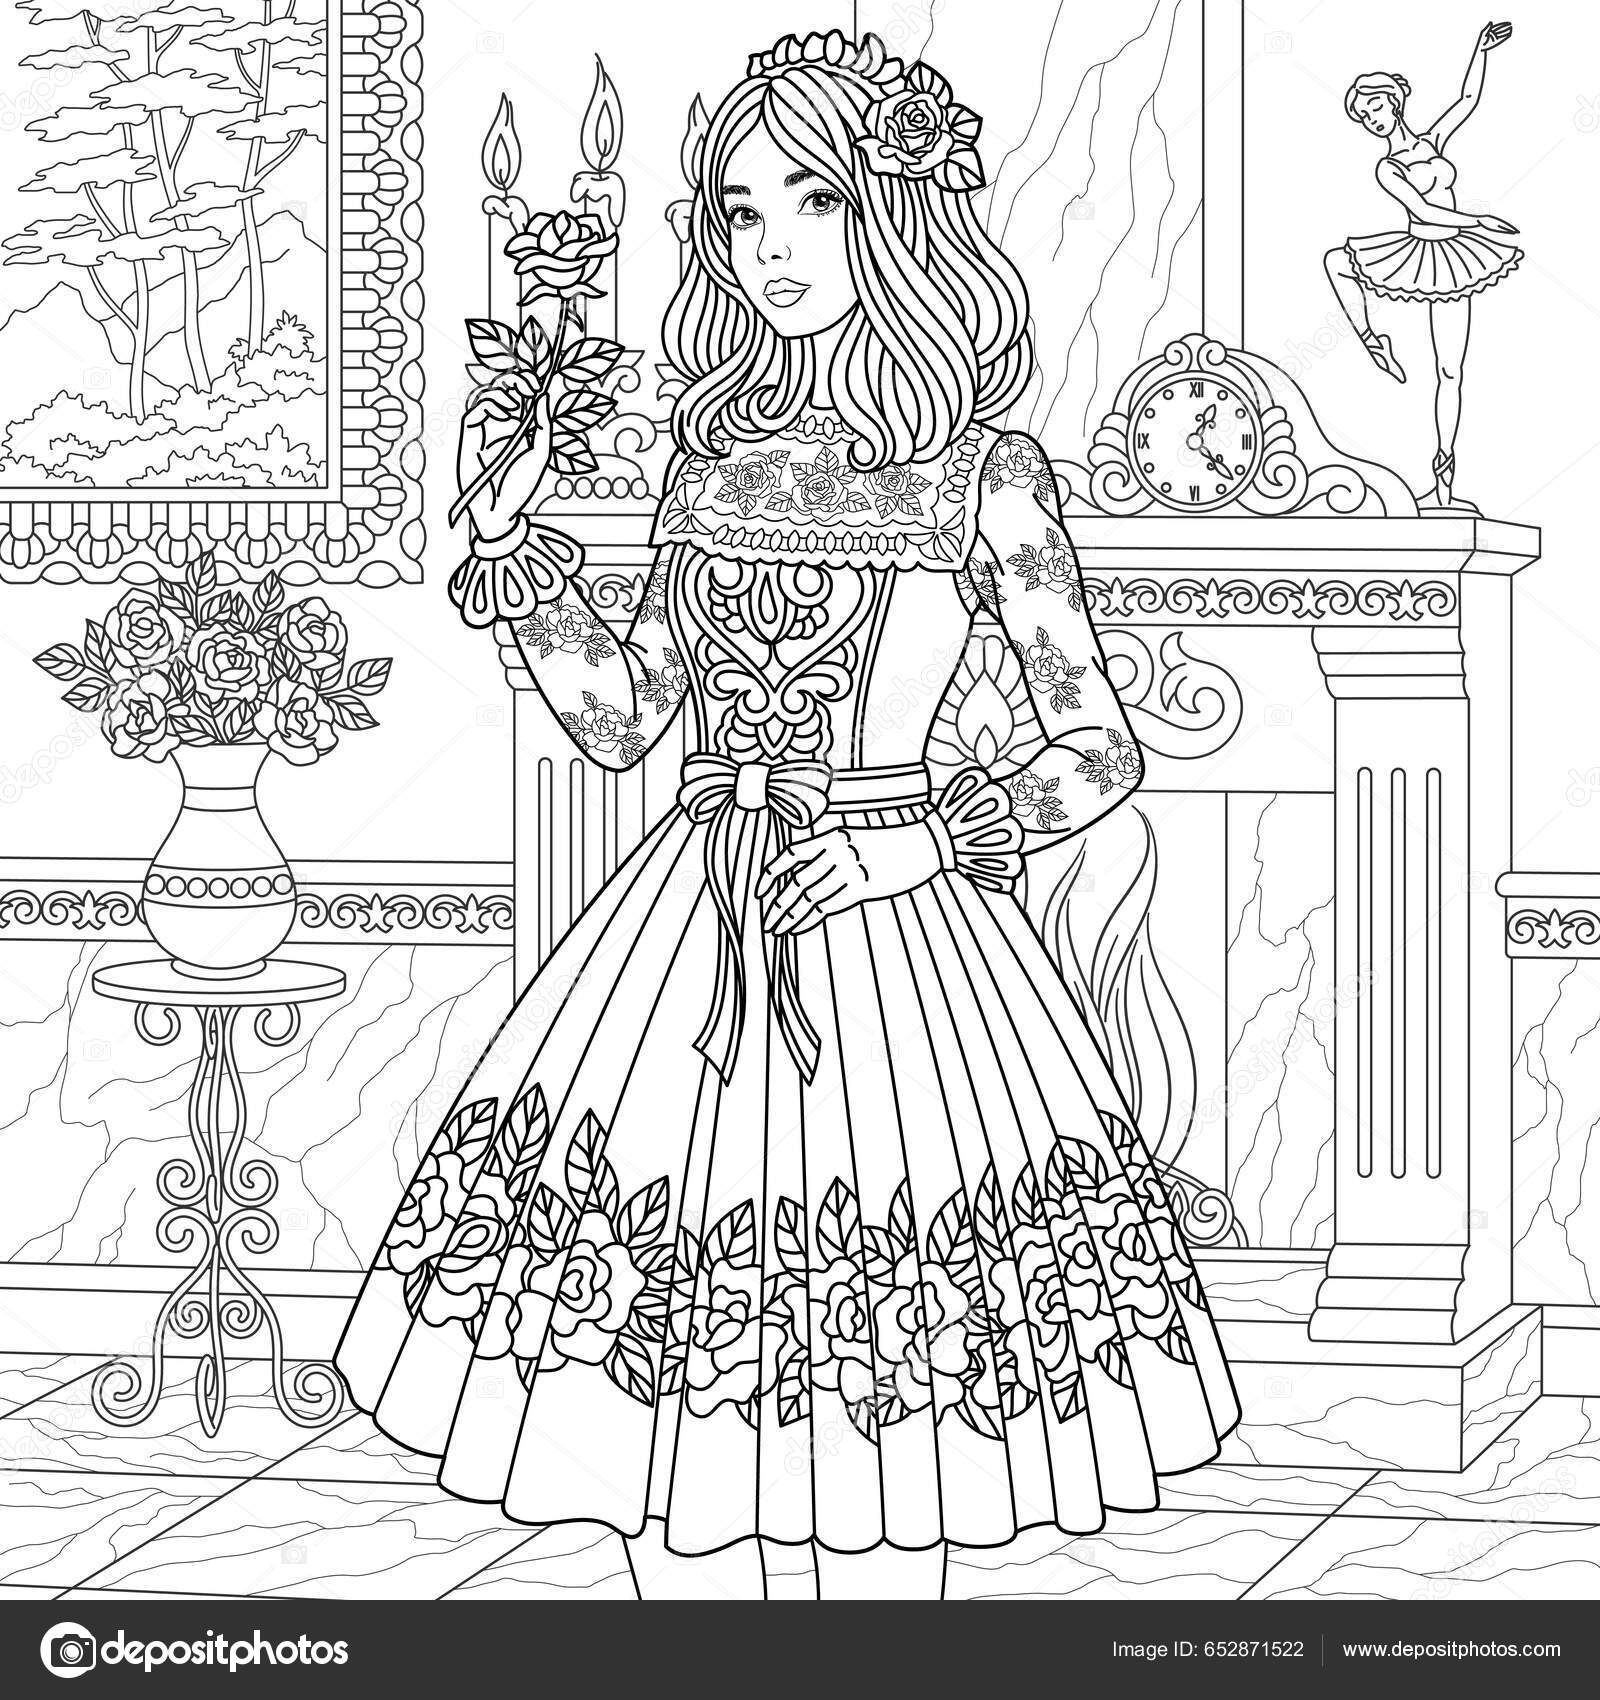 Mandalas Fleuris : Livre de coloriage adulte anti-stress - Color